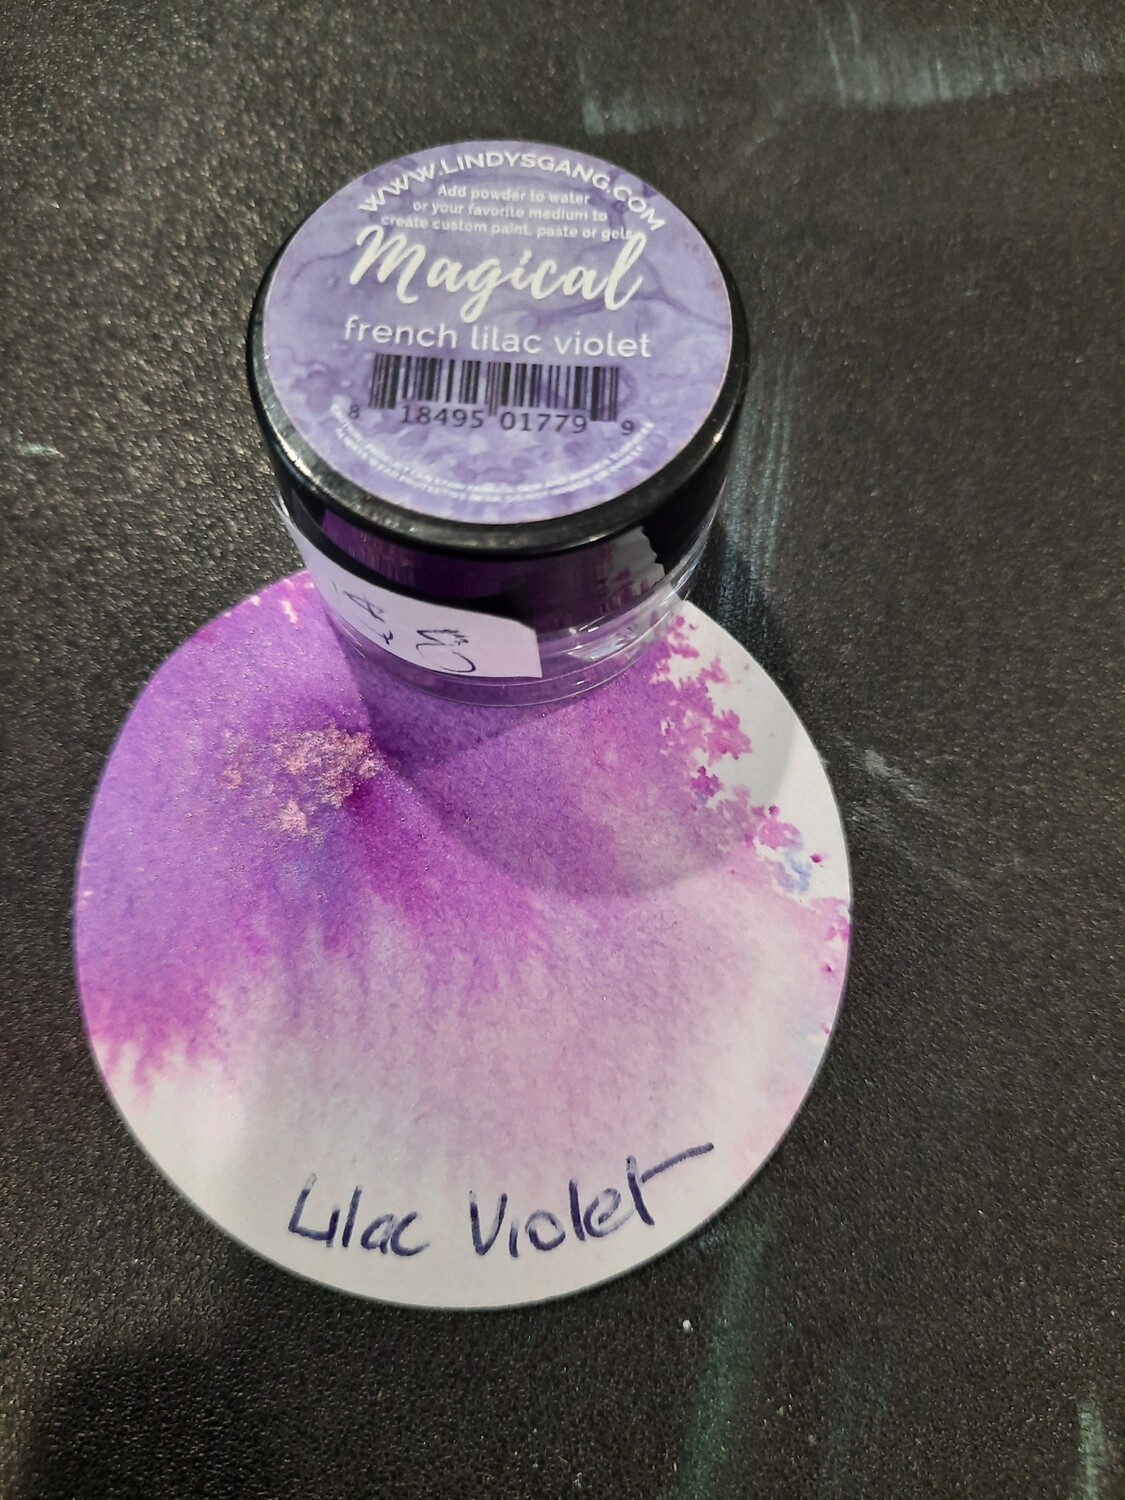 Magical lilac violet